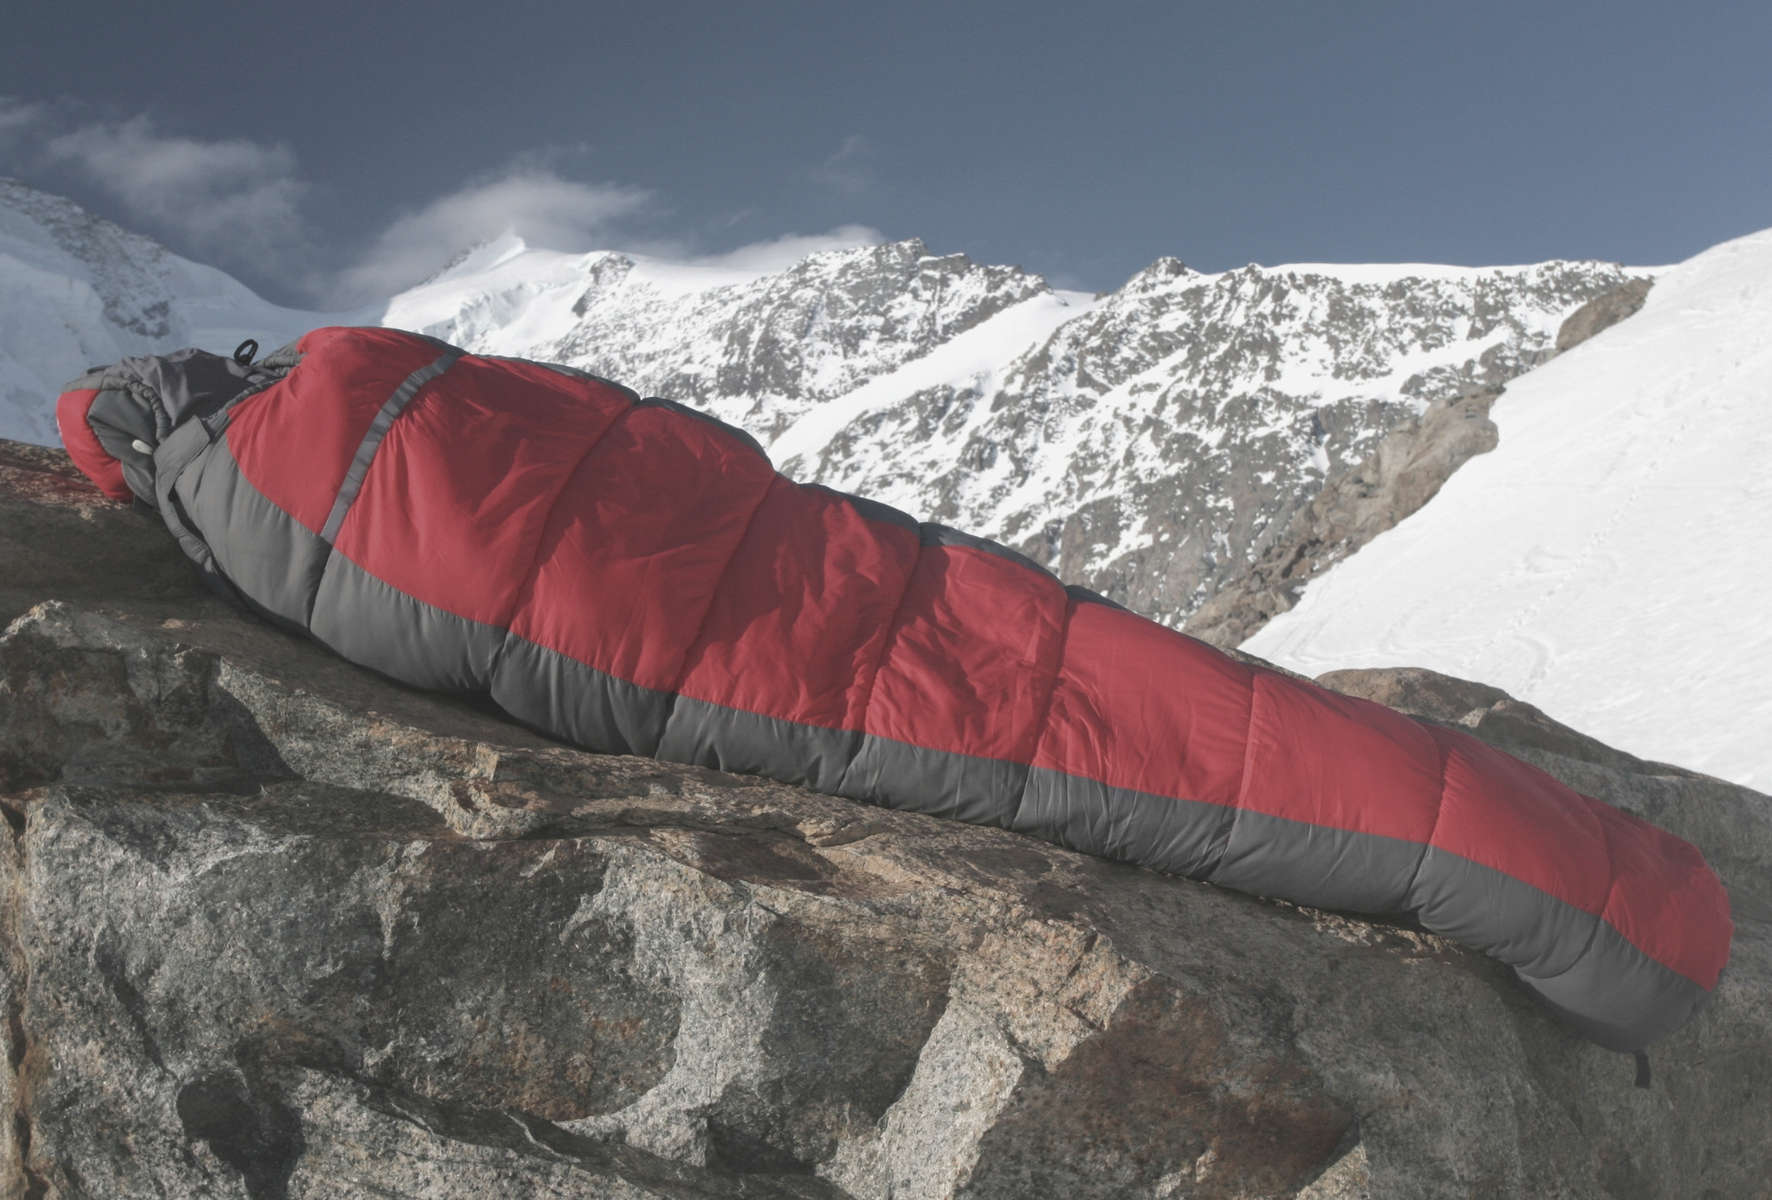 Sleeping Bag on rock in mountains